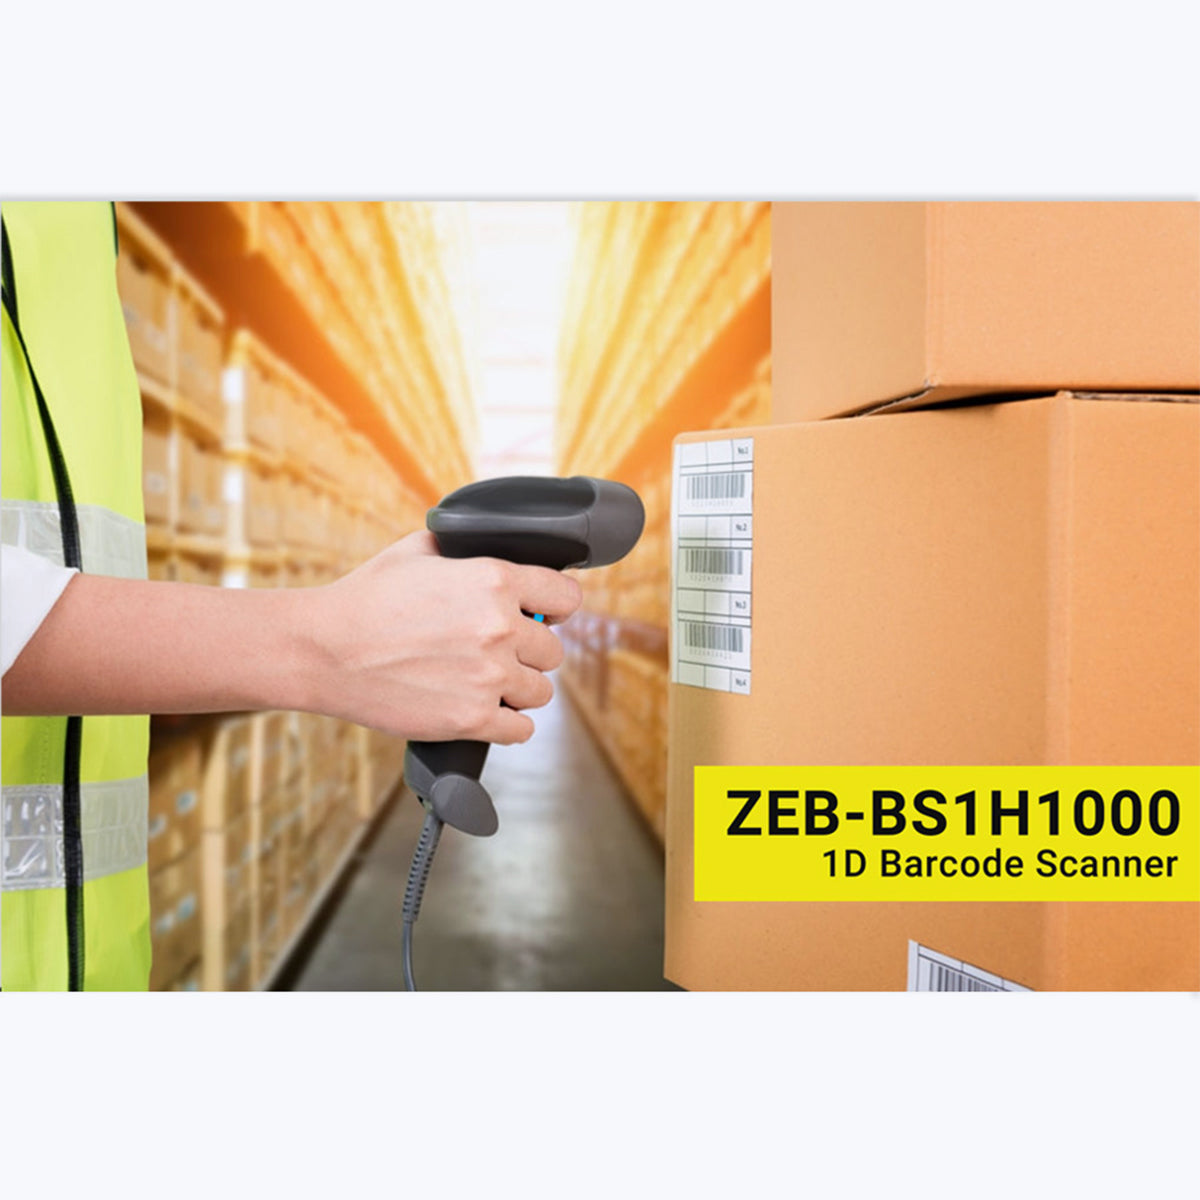 Zeb-BS1H1000 - Barcode Scanner - Zebronics